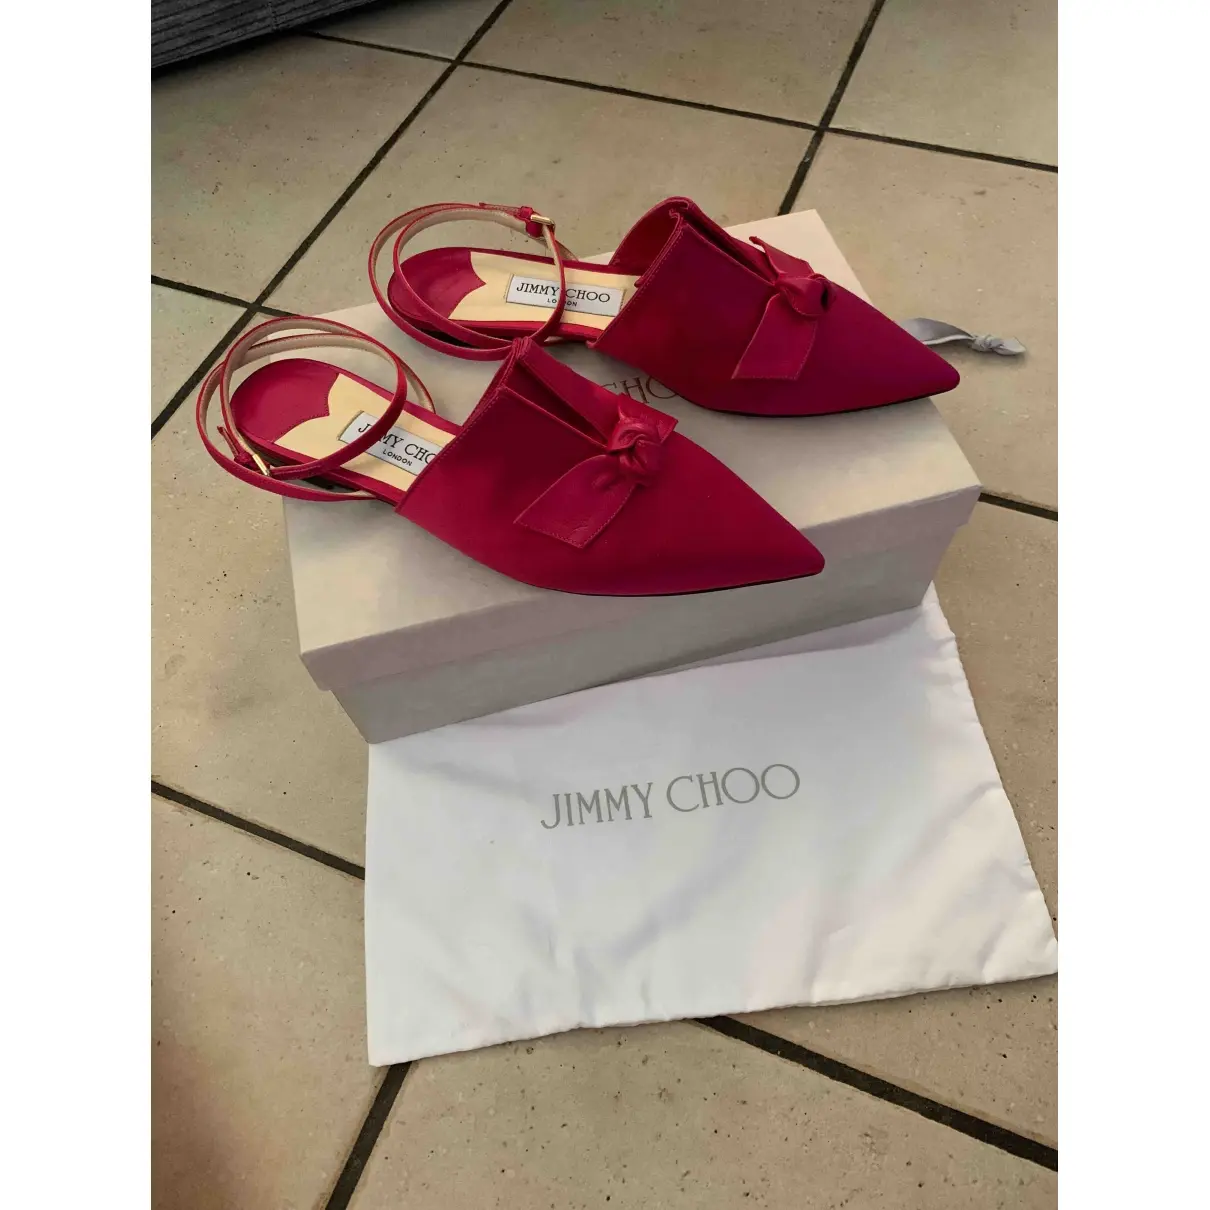 Buy Jimmy Choo Leather ballet flats online